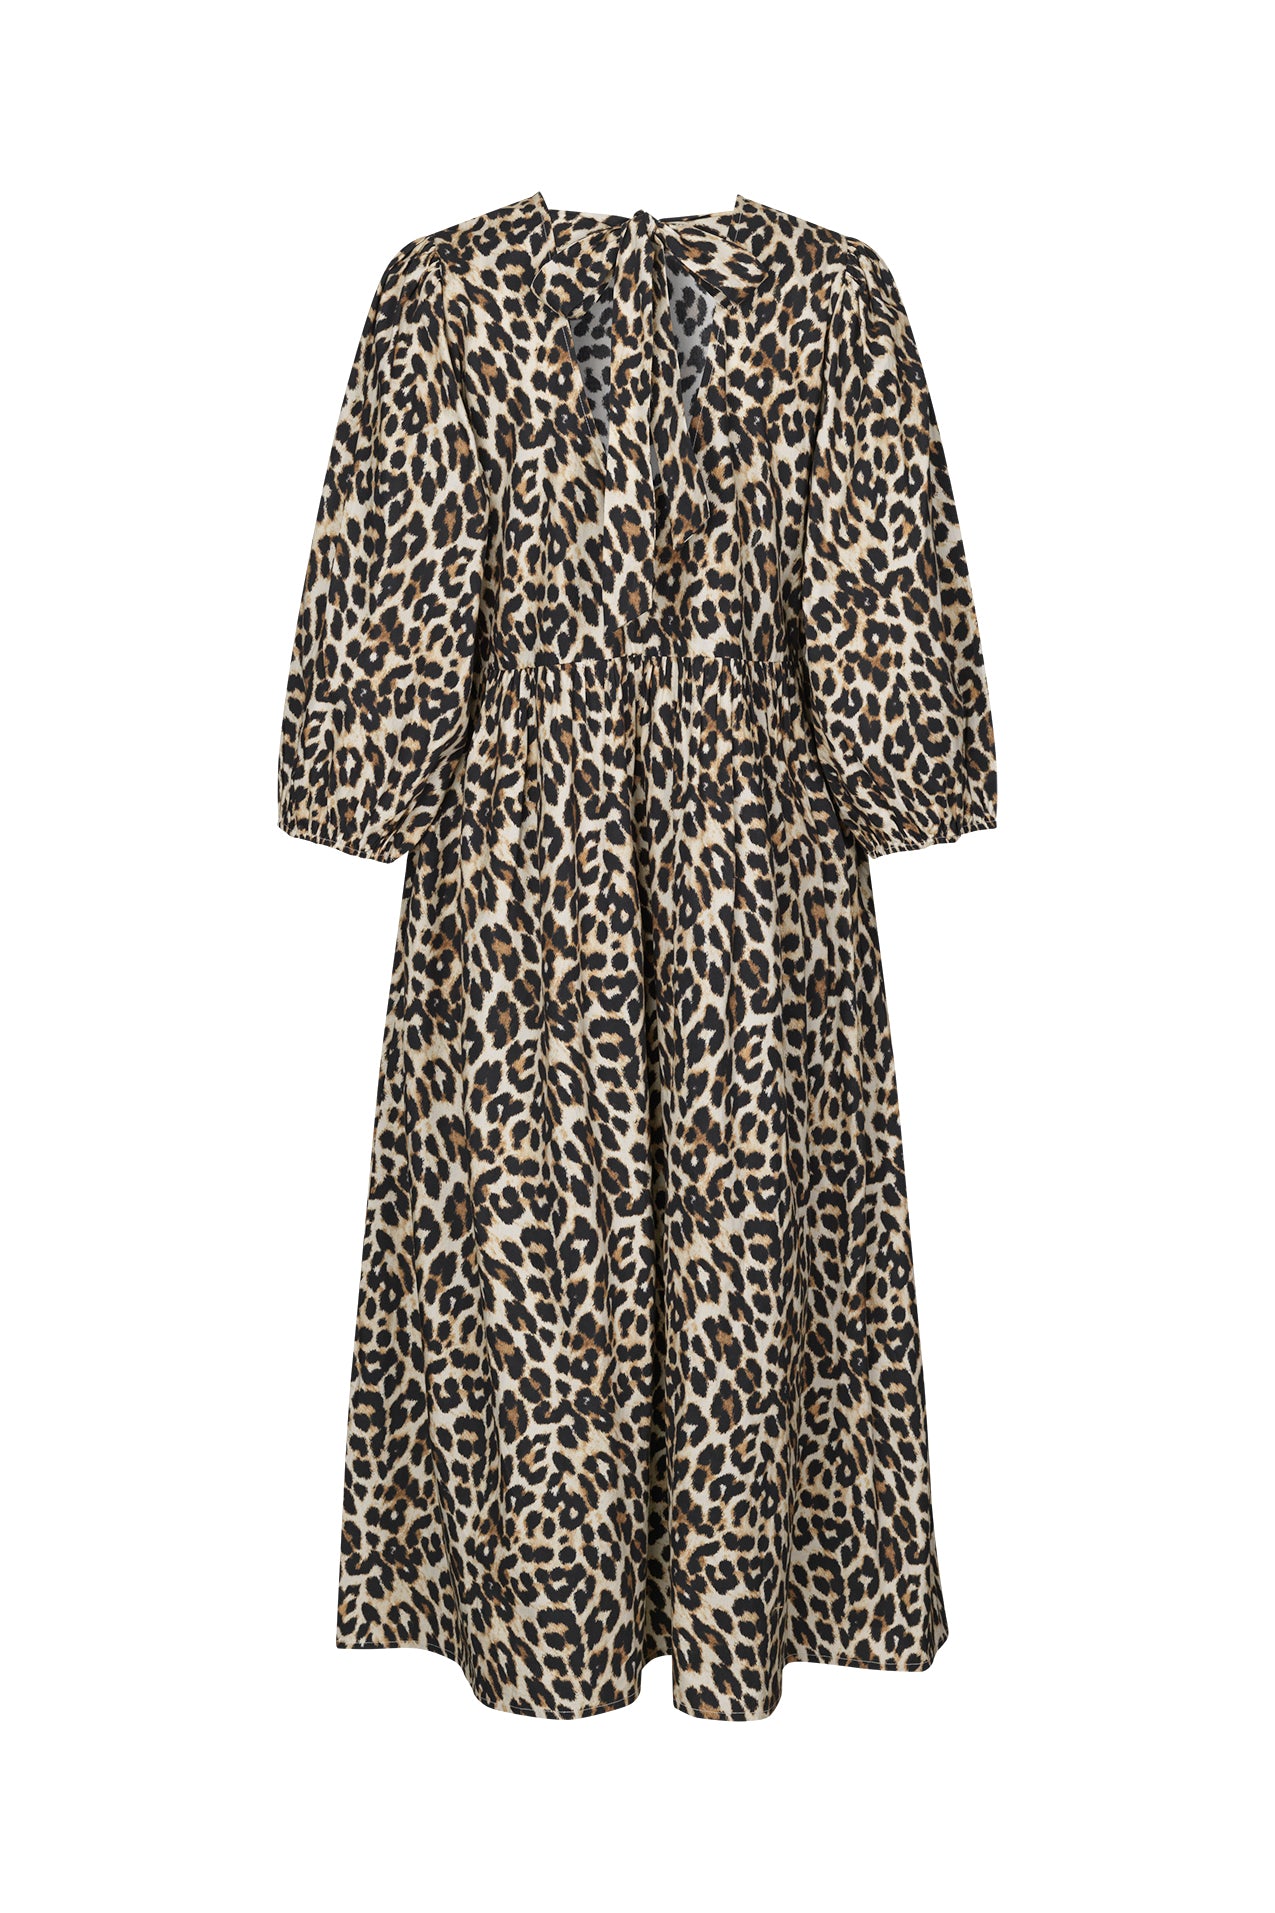 Lollys Laundry Marion Dress Dress 72 Leopard Print